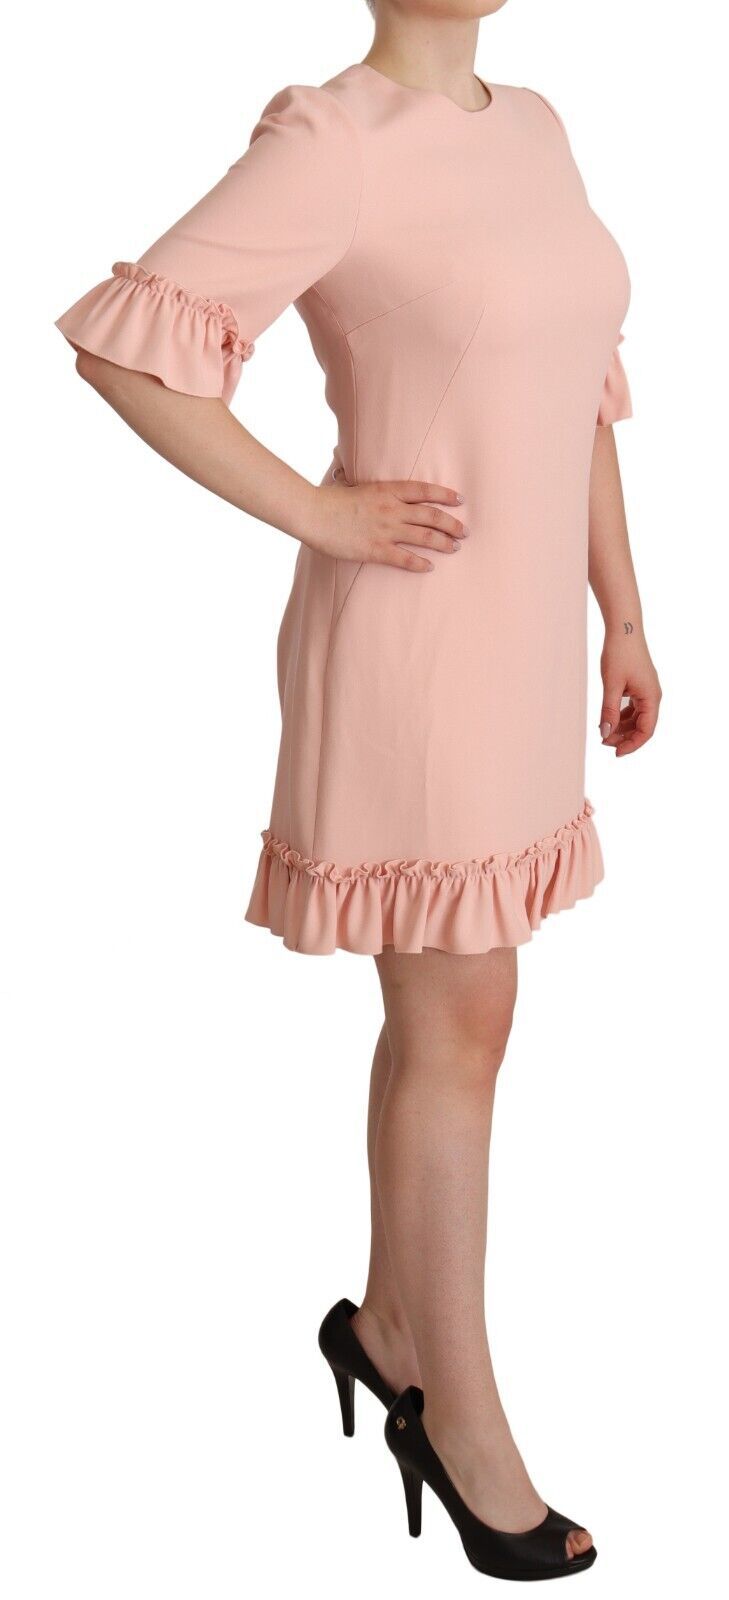 Dolce & Gabbana Ruffled Sleeve Sheath Dress in Women's Pink